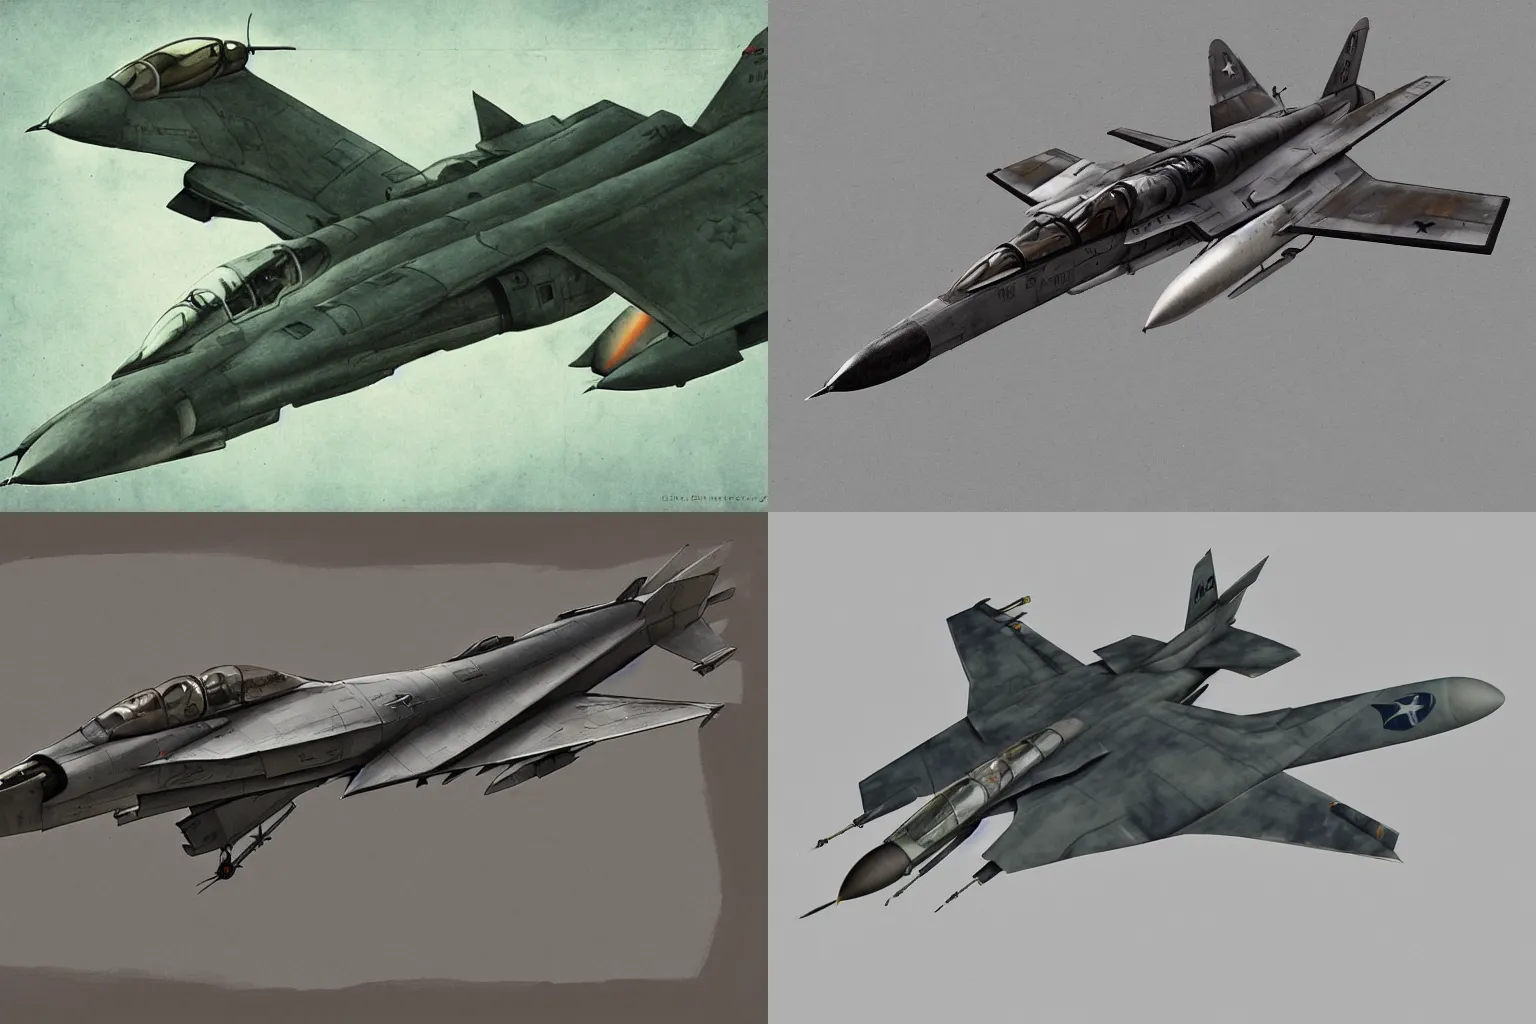 Prompt: vintage fighter jet plane by jama jurabaev, tomcat raptor hornet falcon, style of shoji kawamori, style of john kenn mortensen